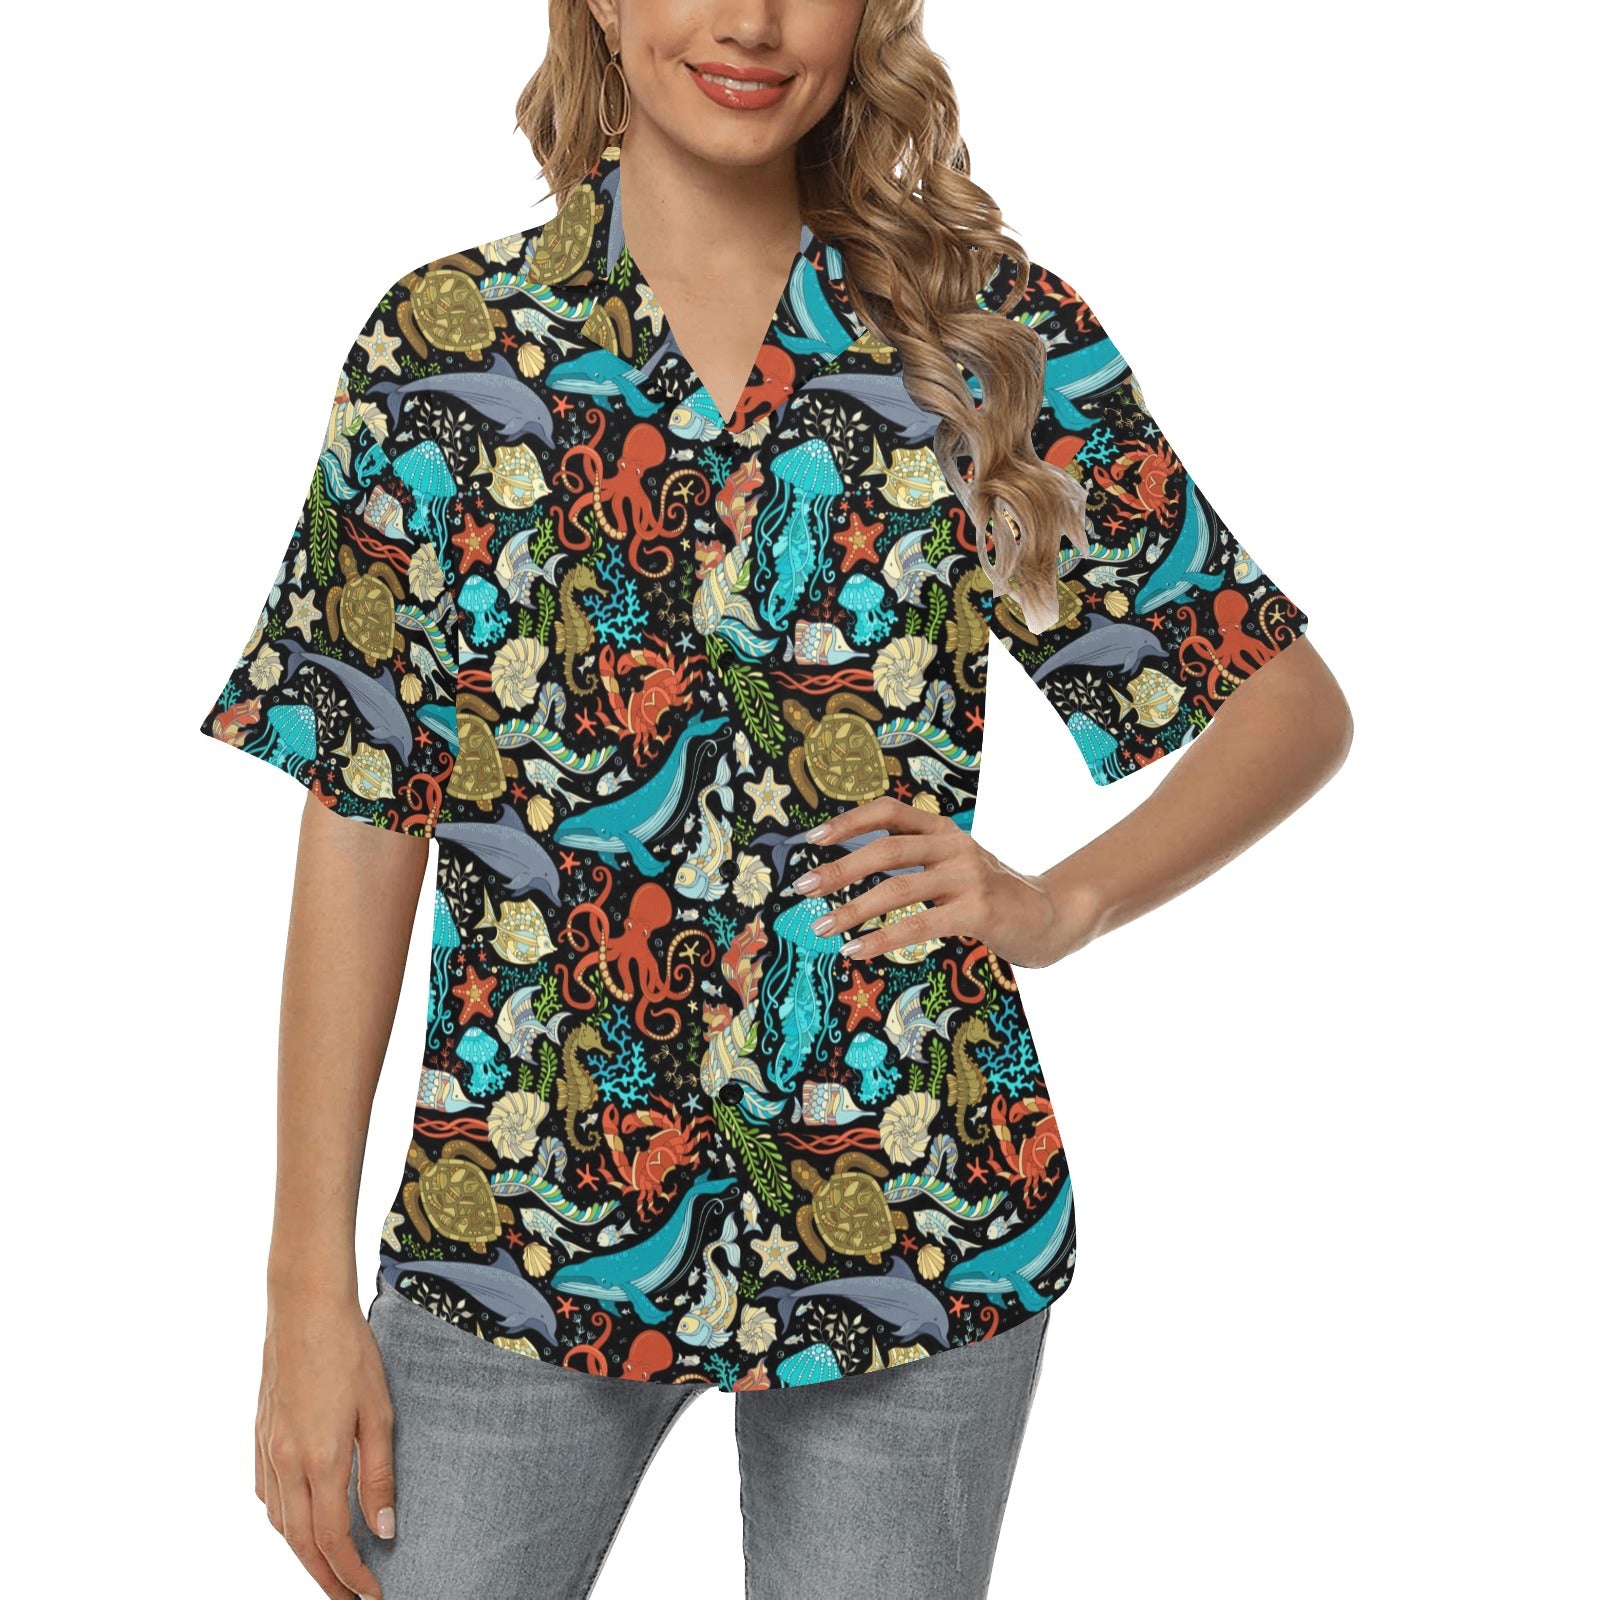 Underwater Animal Print Design LKS301 Women's Hawaiian Shirt